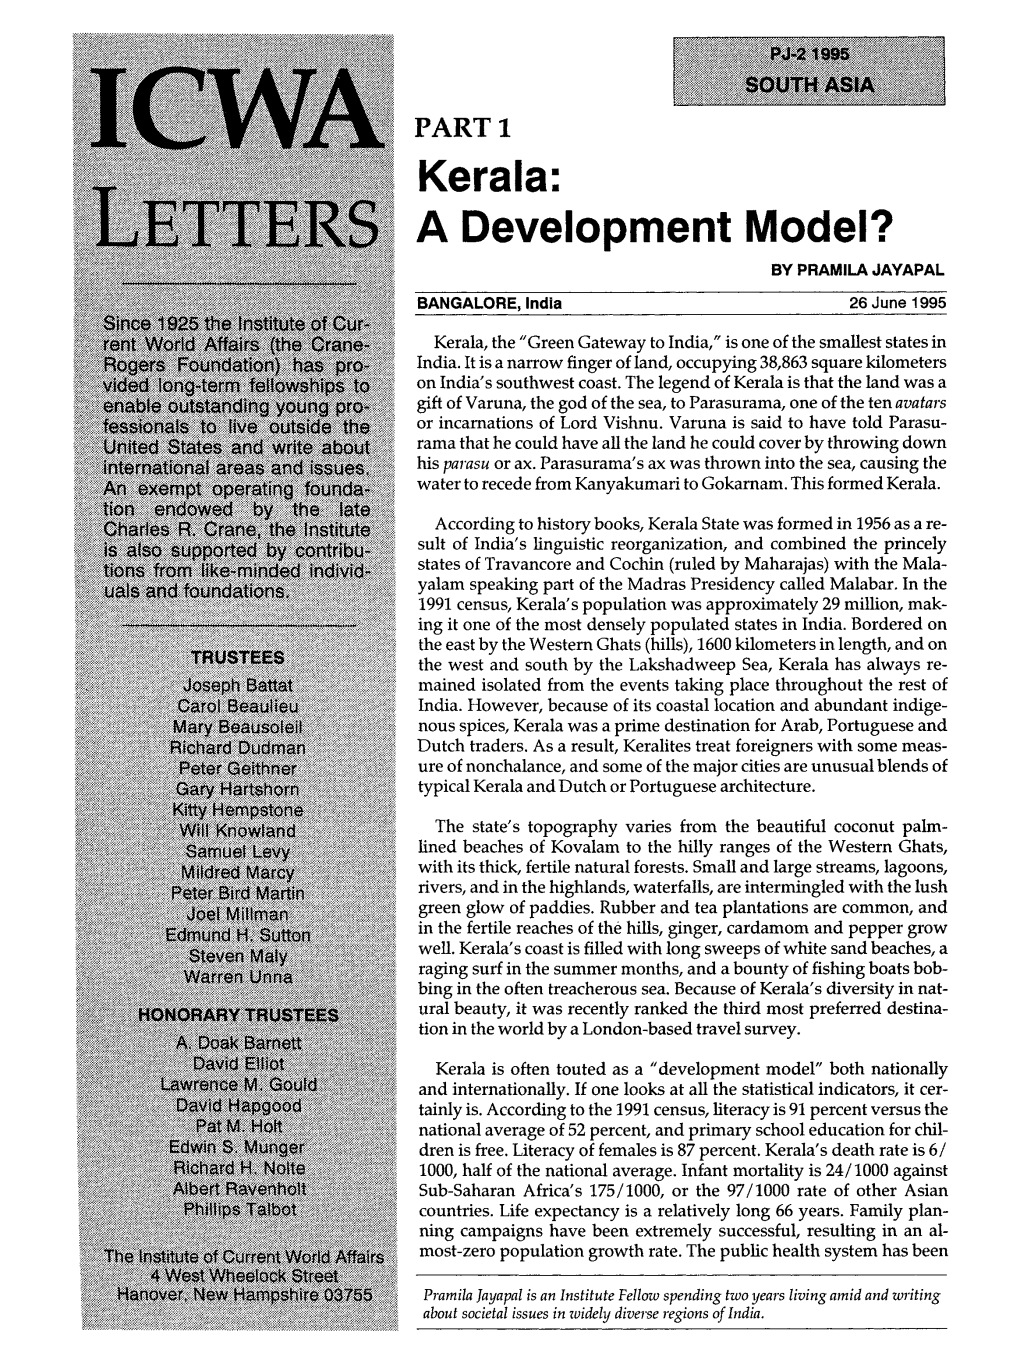 Kerala: a Development Model? by PRAMILA JAYAPAL BANGALORE, India 26 June 1995